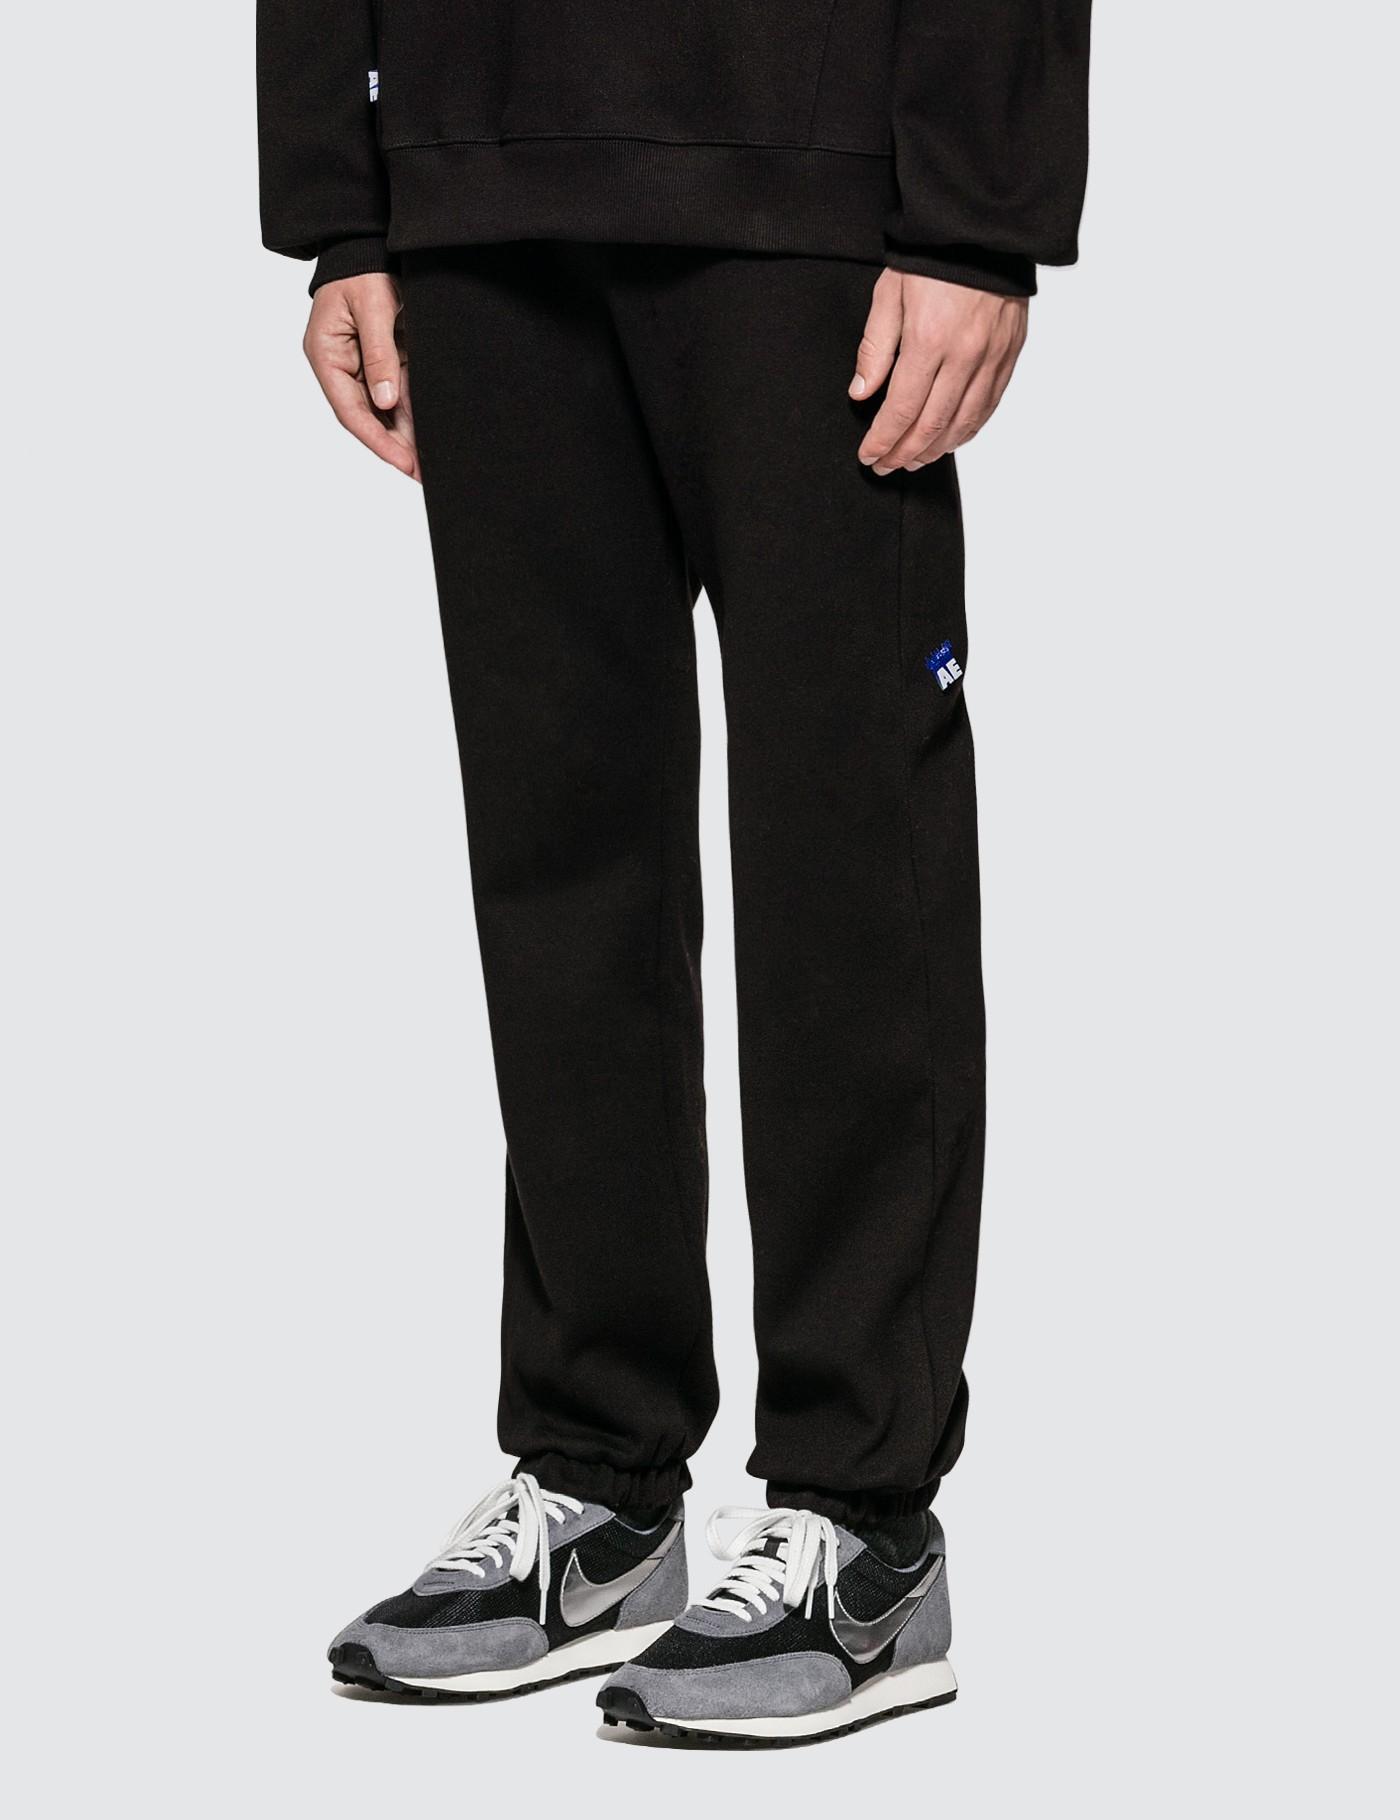 ADER error Cotton Embroidered Logo Sweatpants in Black for Men - Lyst